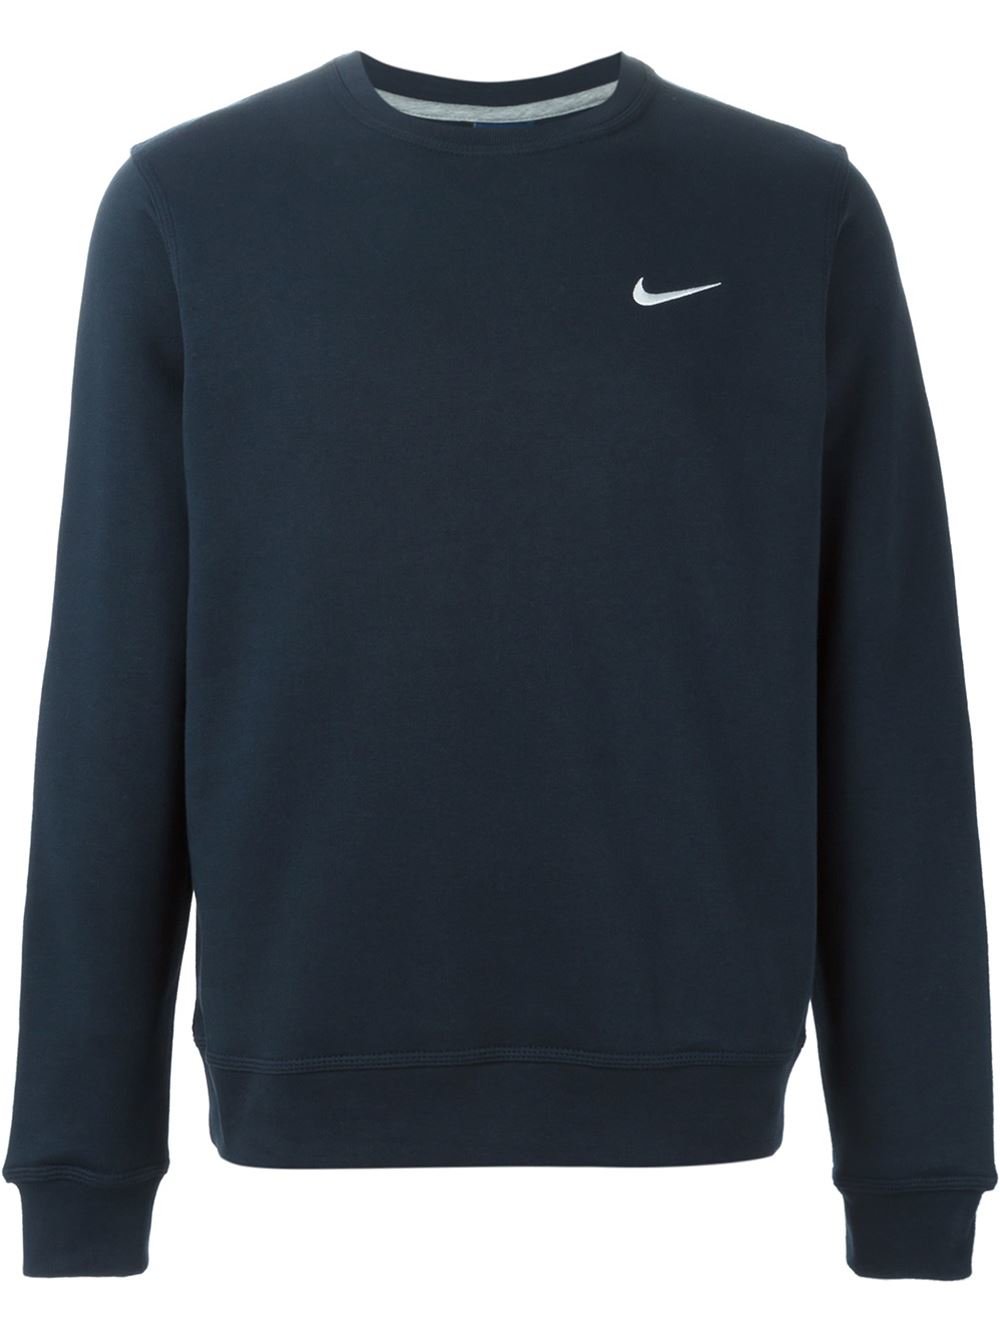 Nike 'club Crew' Sweatshirt in Blue for Men - Lyst